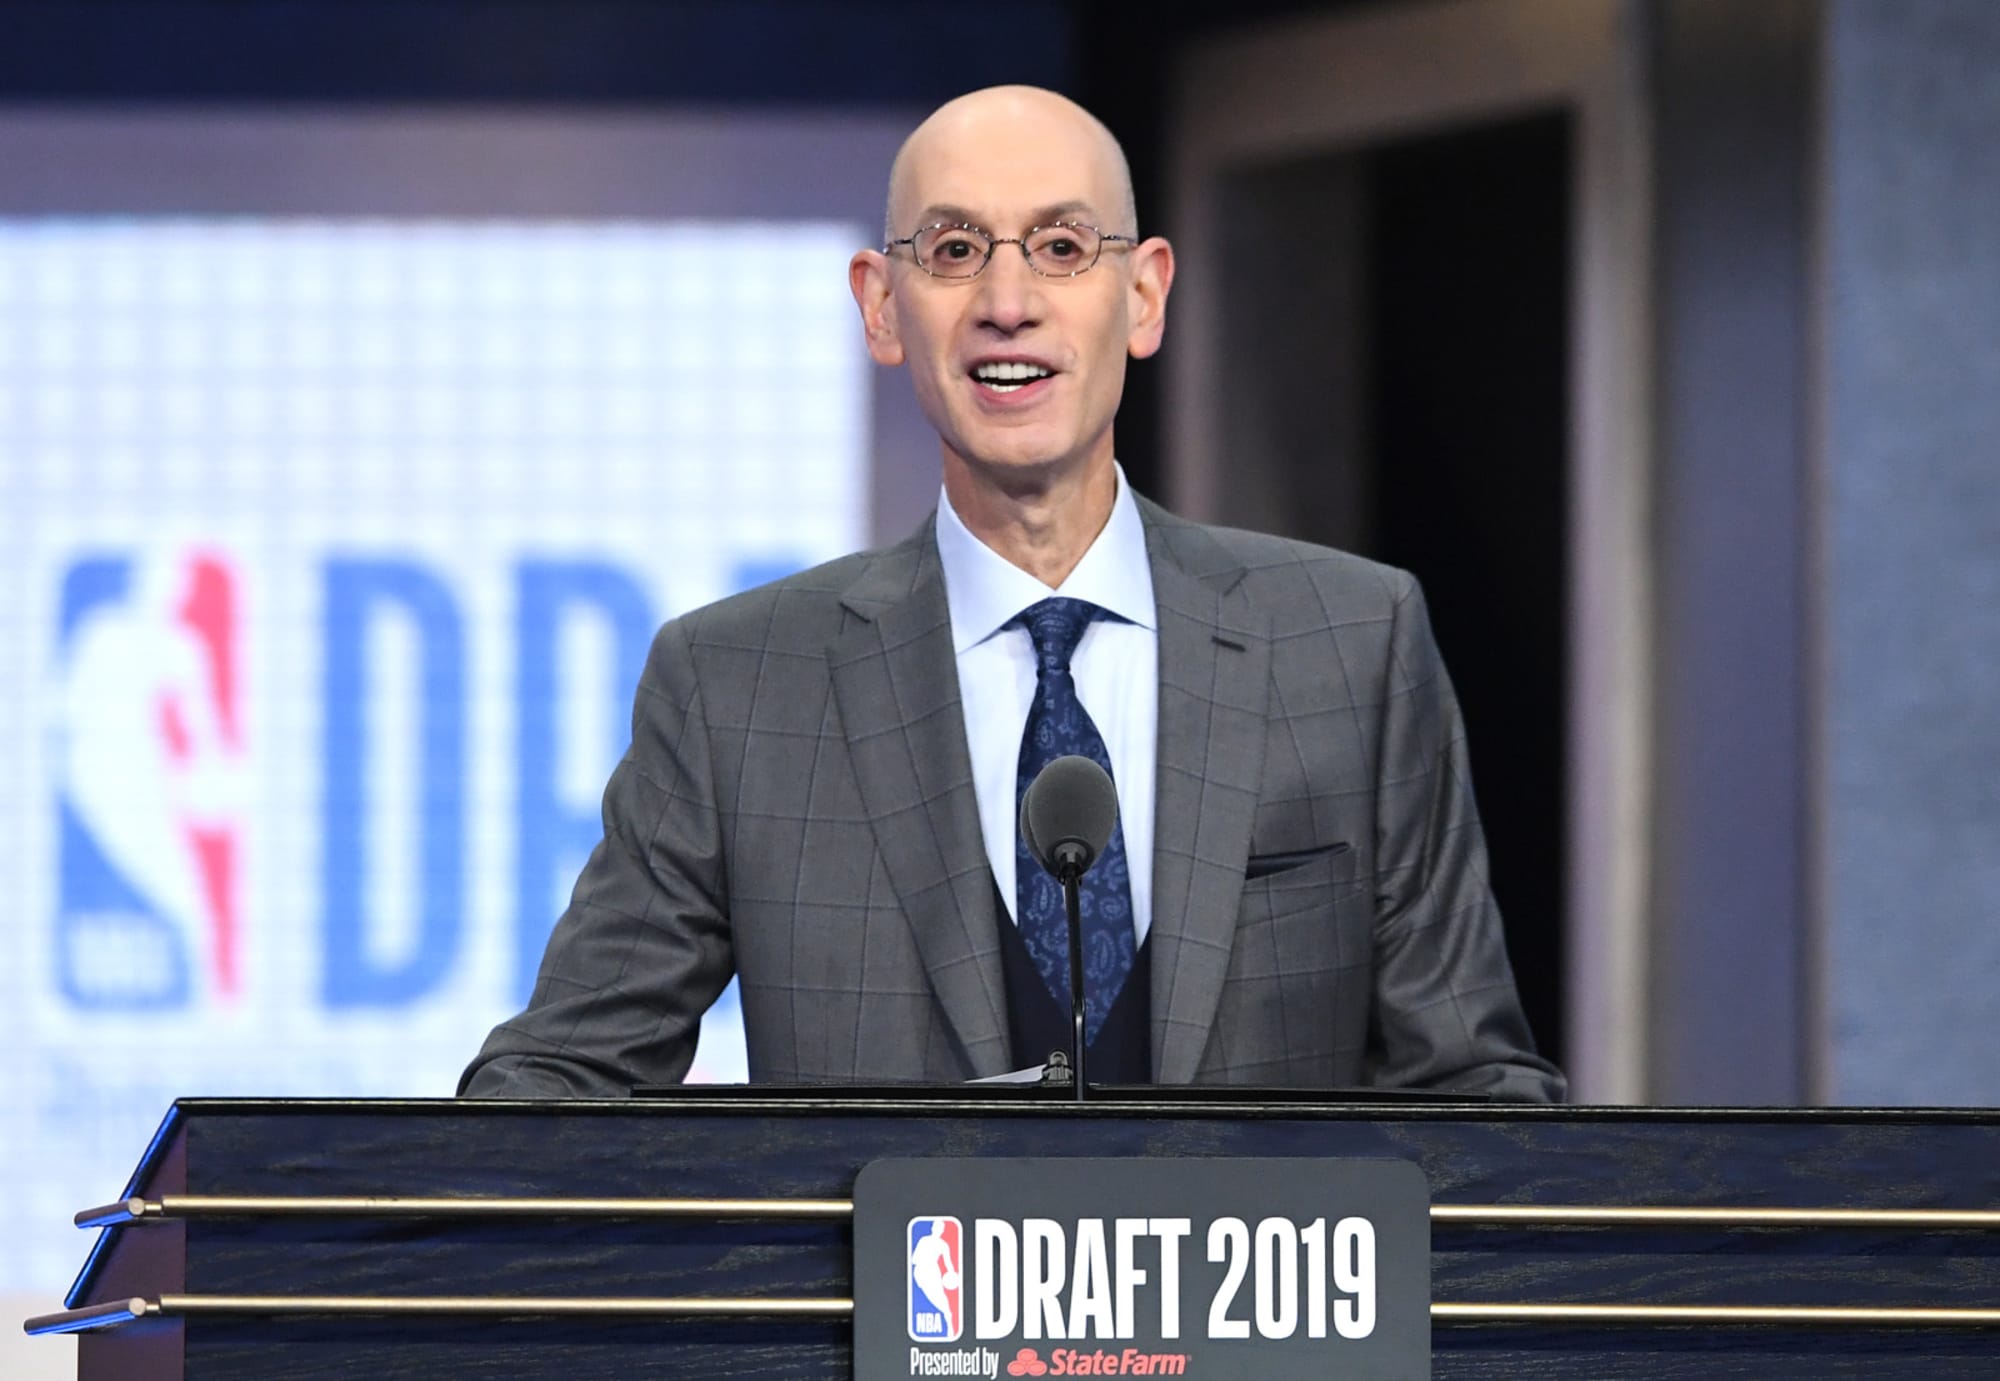 2020 NBA Mock Draft 4.0: Latest intel for all 60 picks